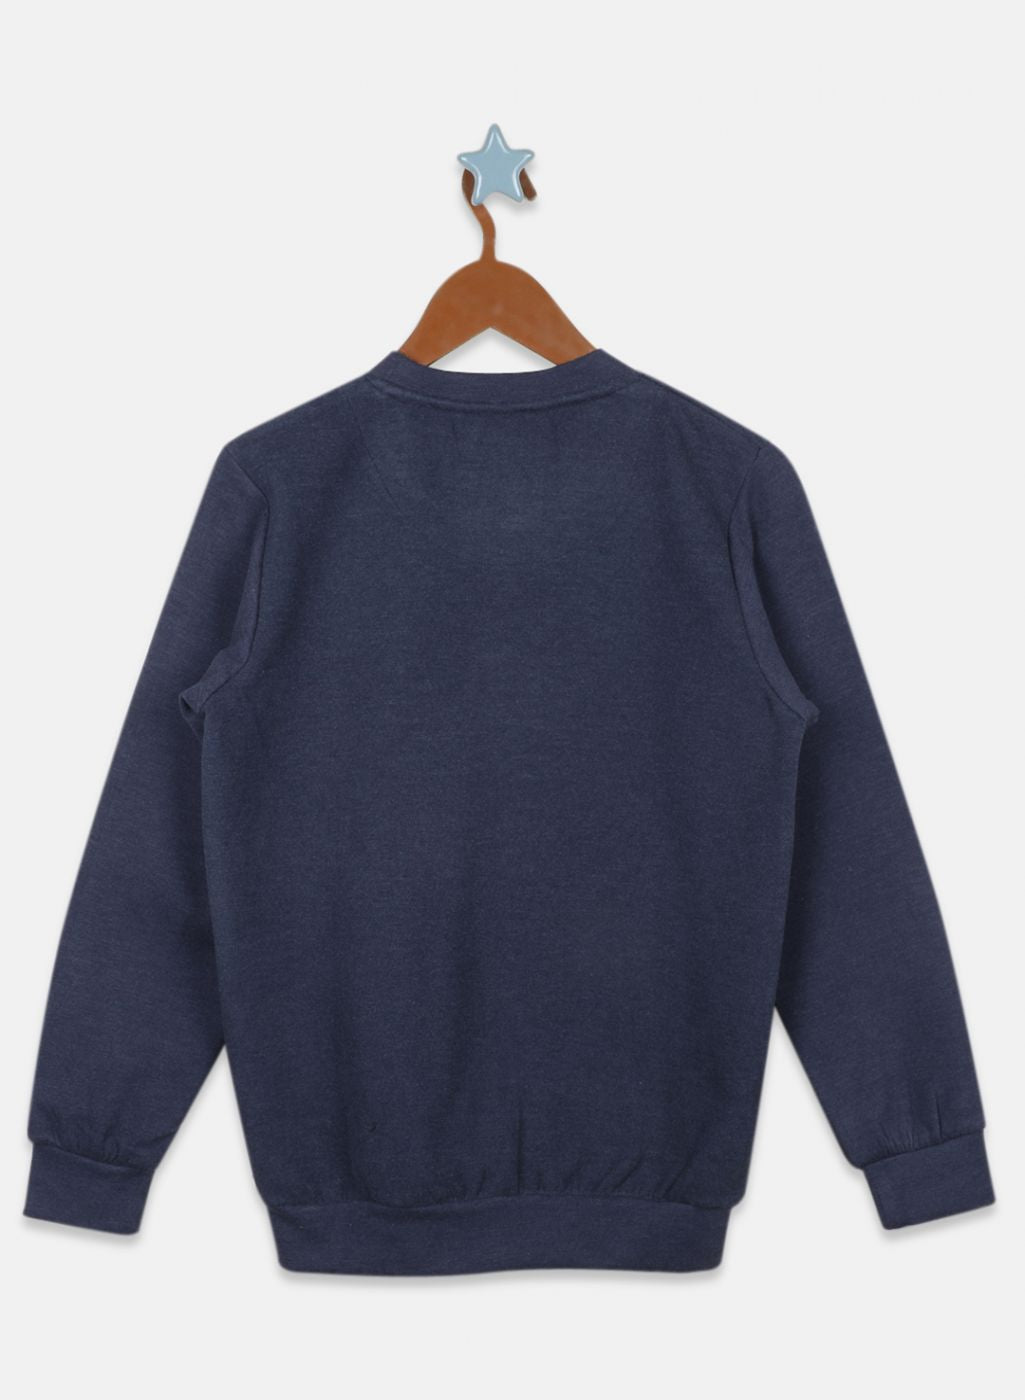 Boys NAvy Blue Solid Sweatshirt